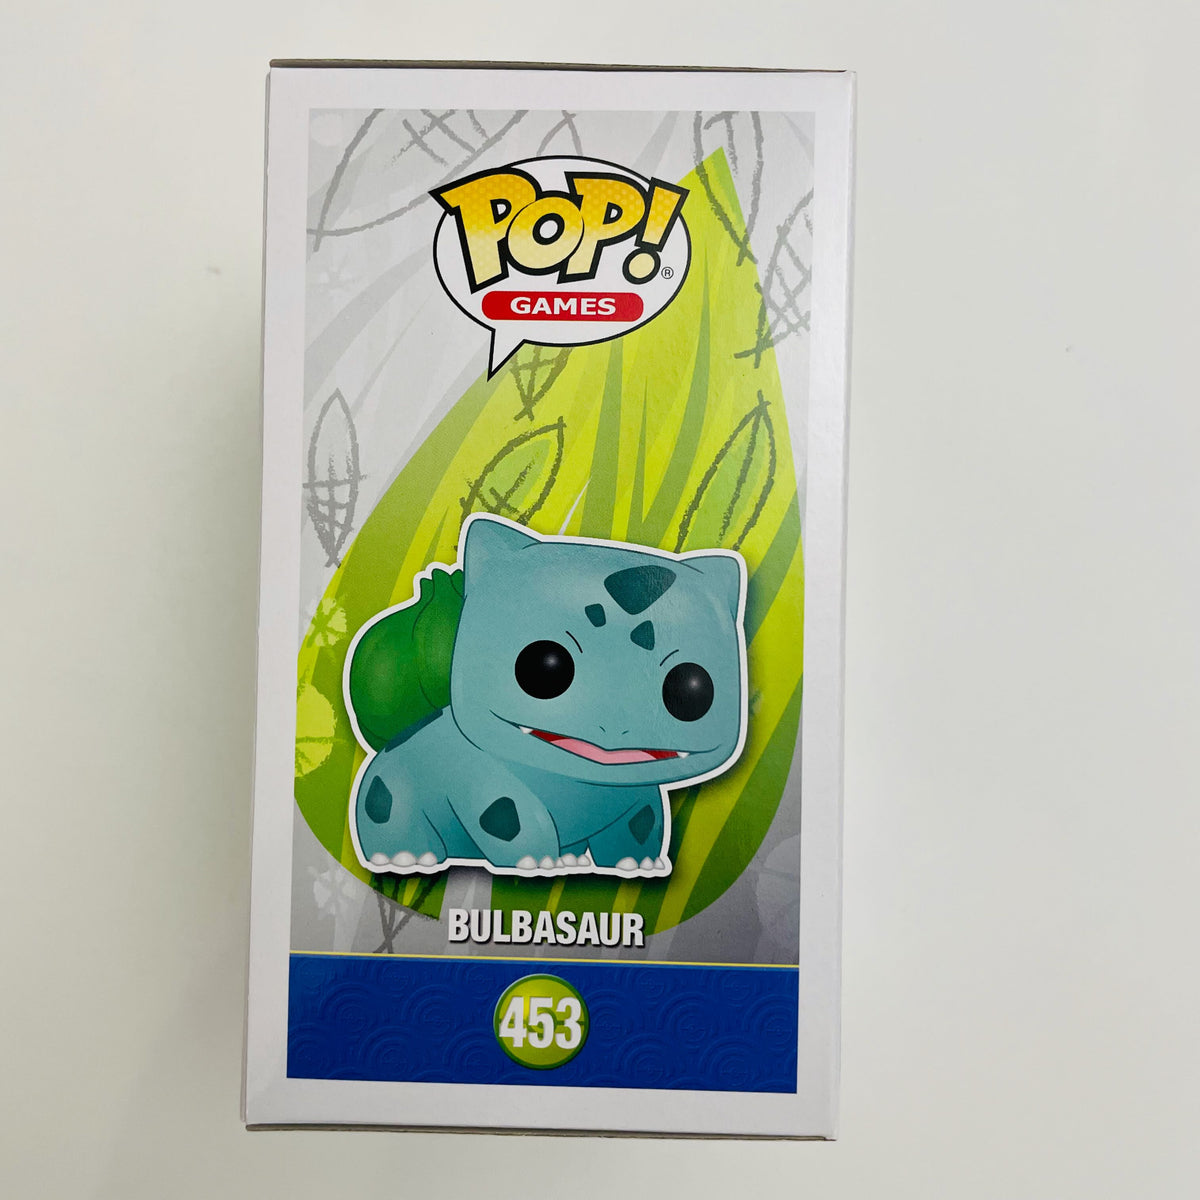 Funko POP Pokemon Bulbasaur Green